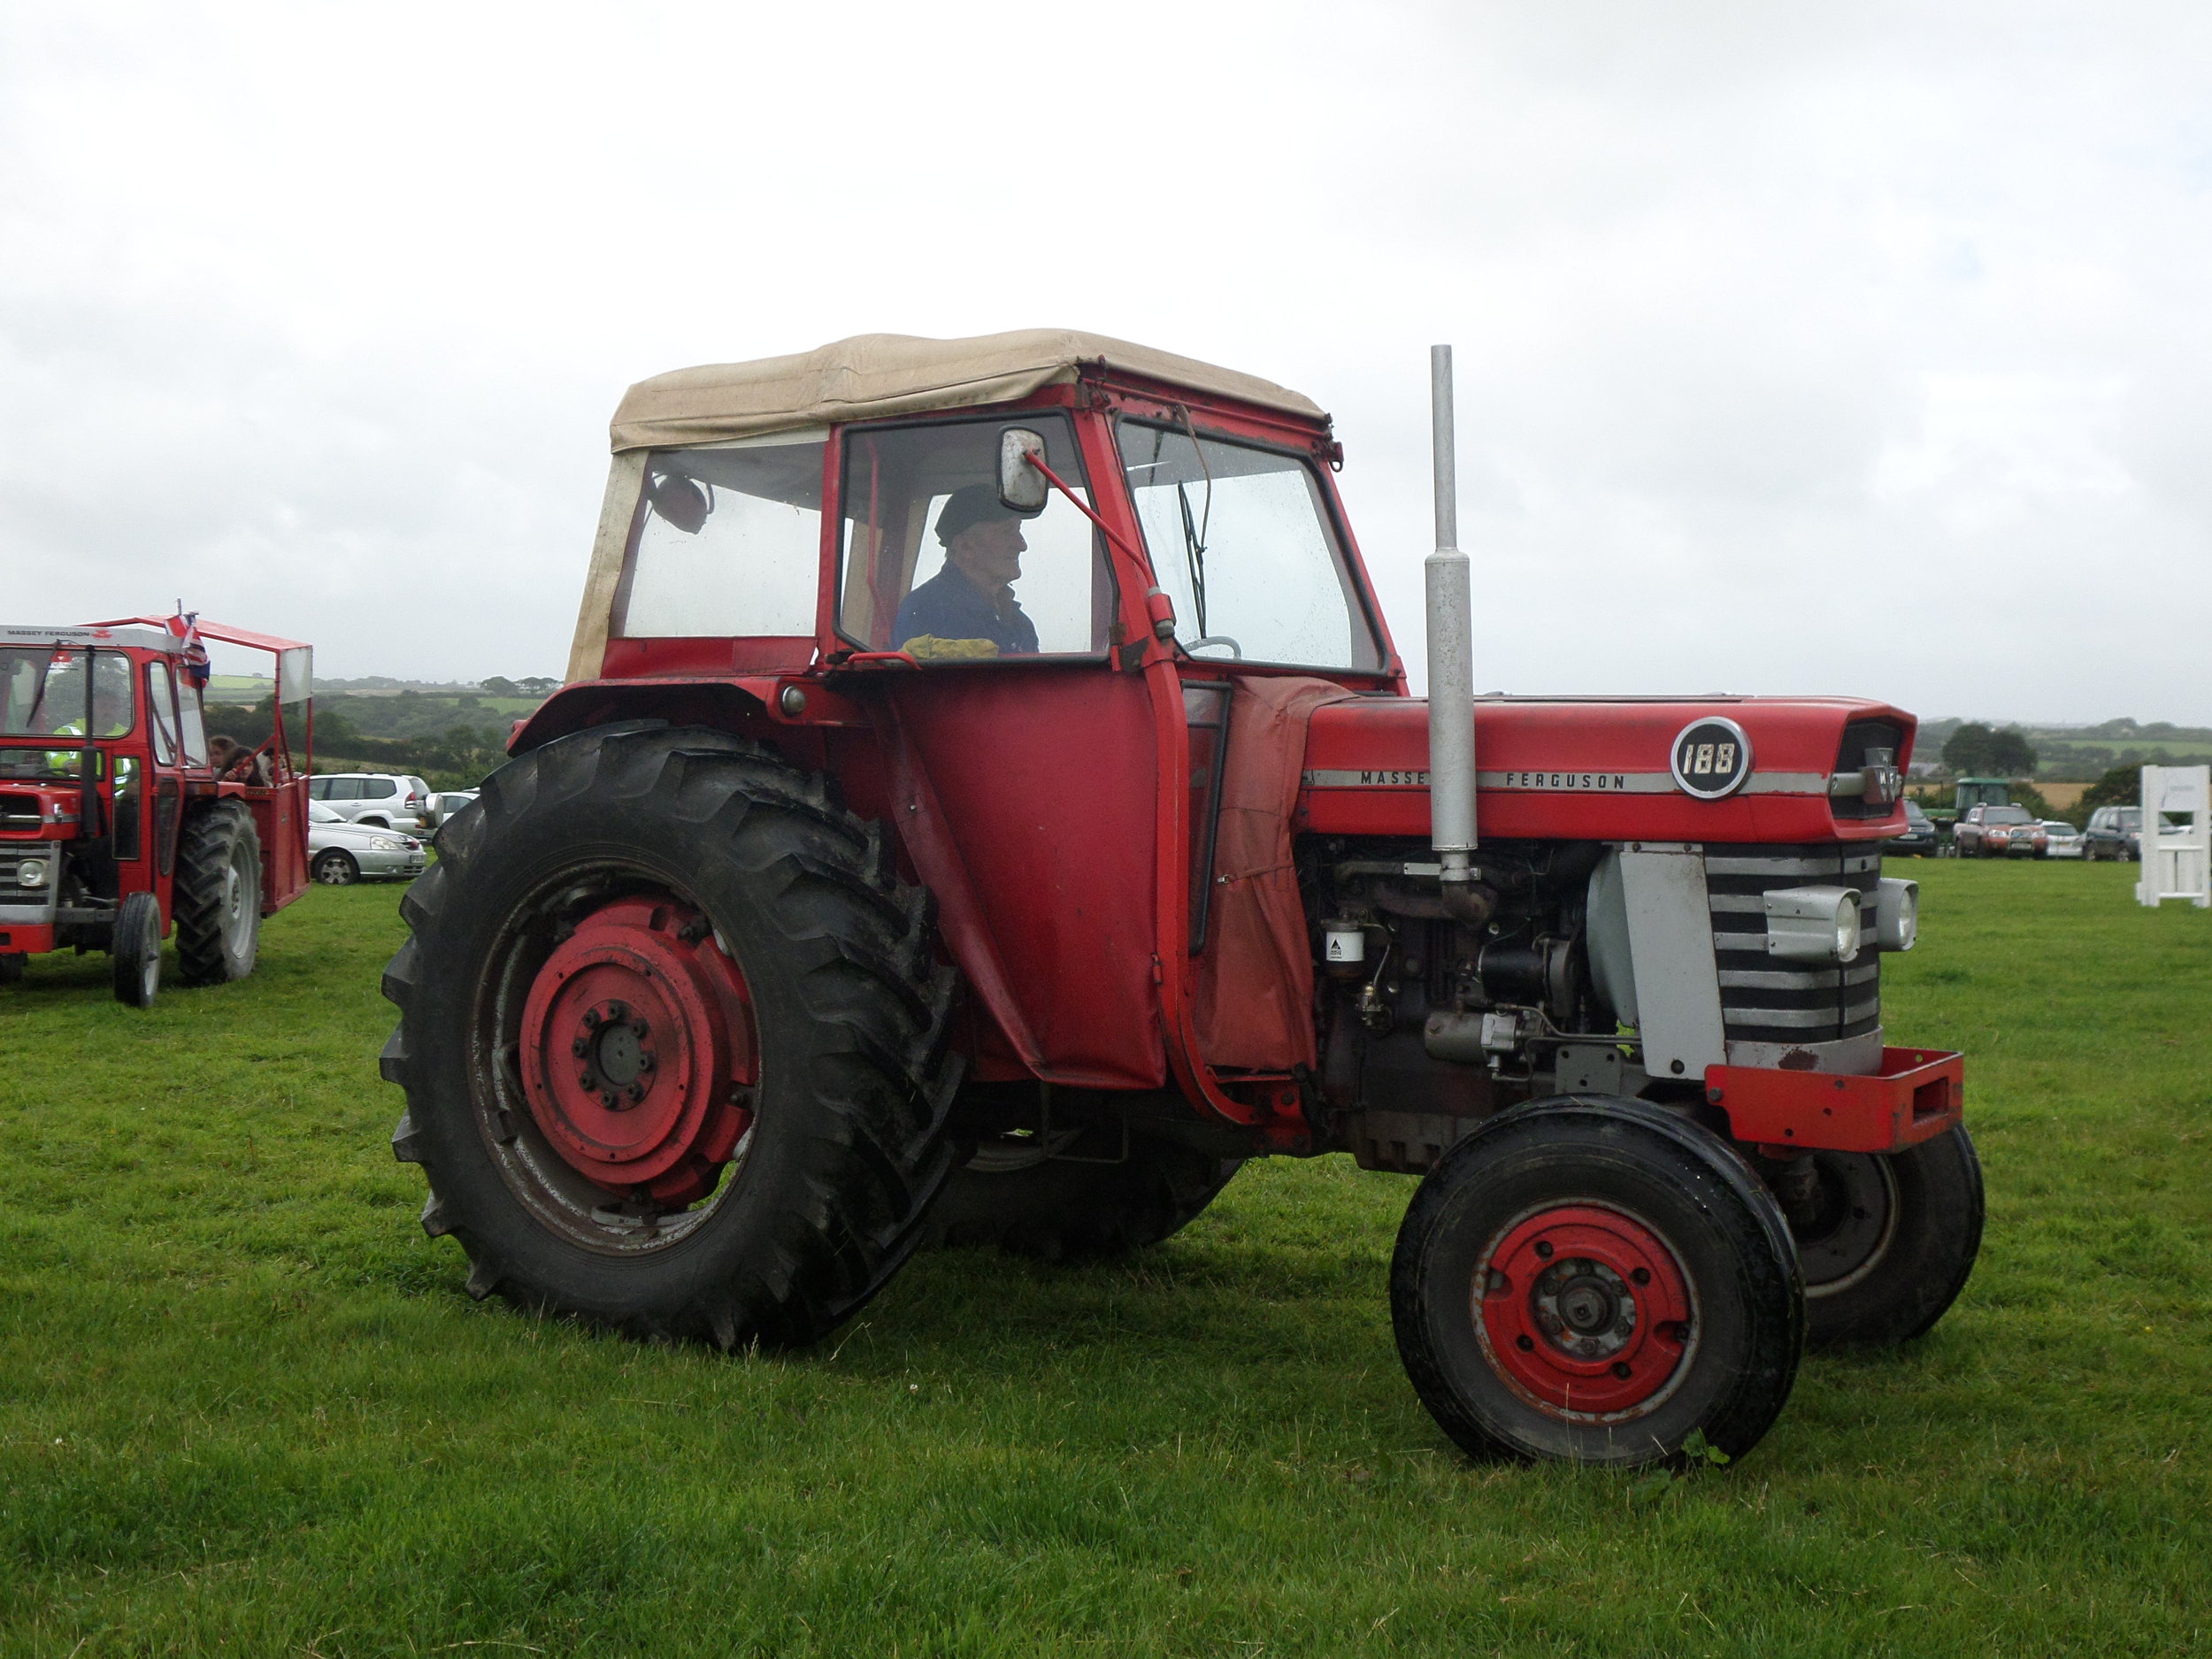 Winning Tractor Massey Ferguson 188  owned by John Tribble